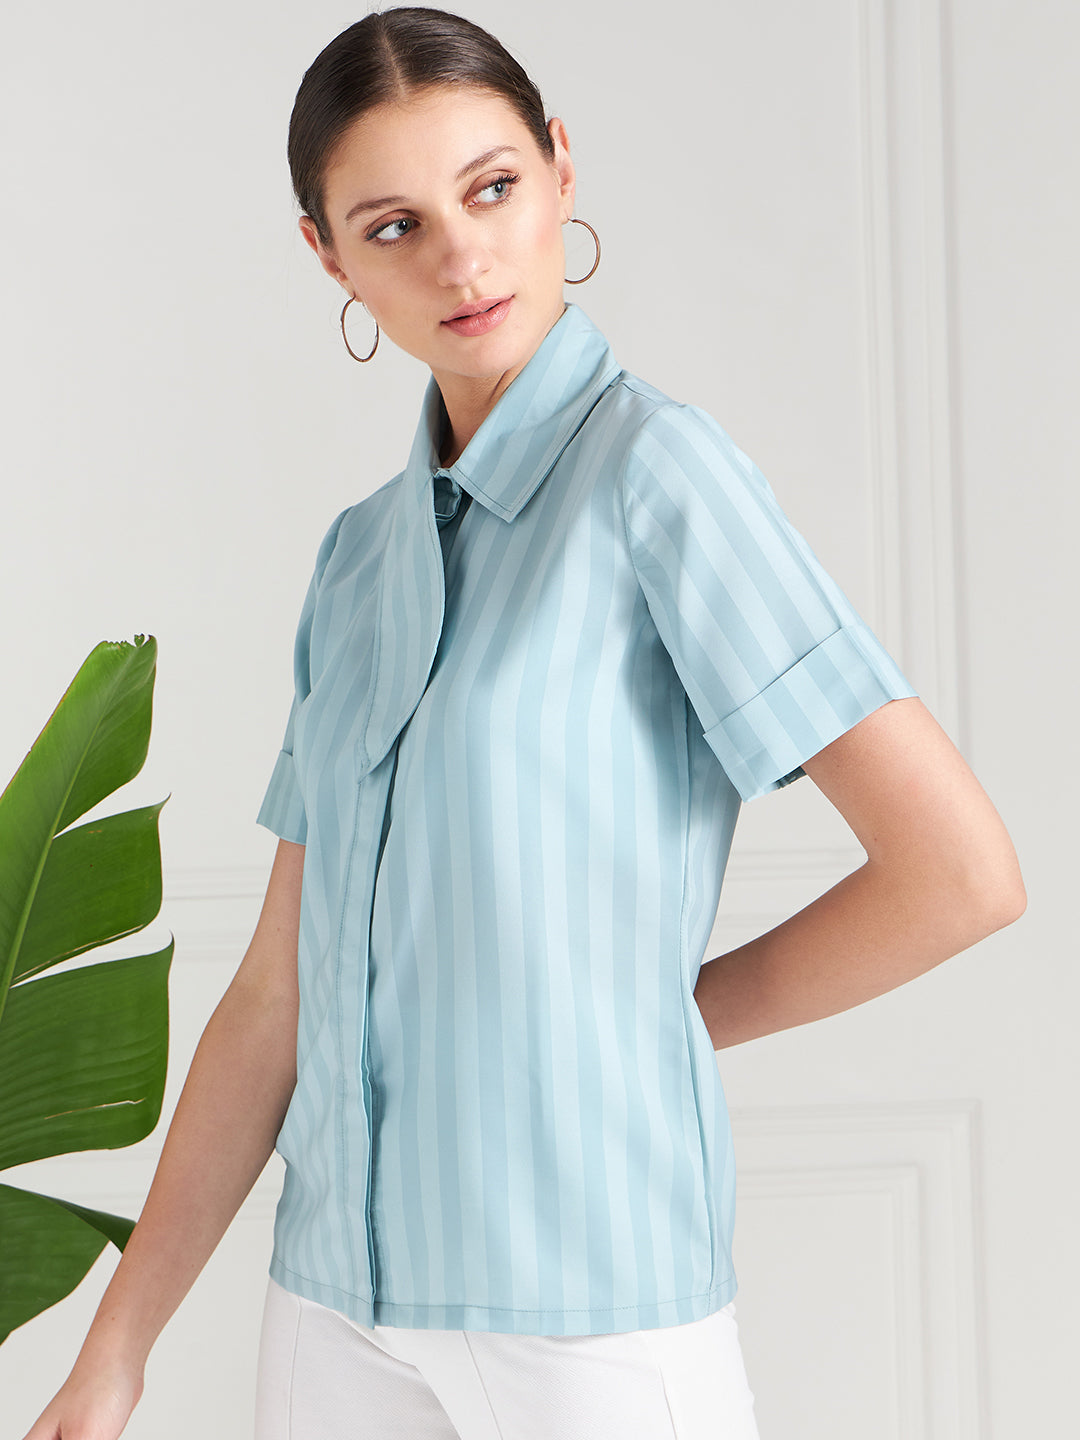 Athena Blue Striped Shirt Collar Shirt Style Top - Athena Lifestyle